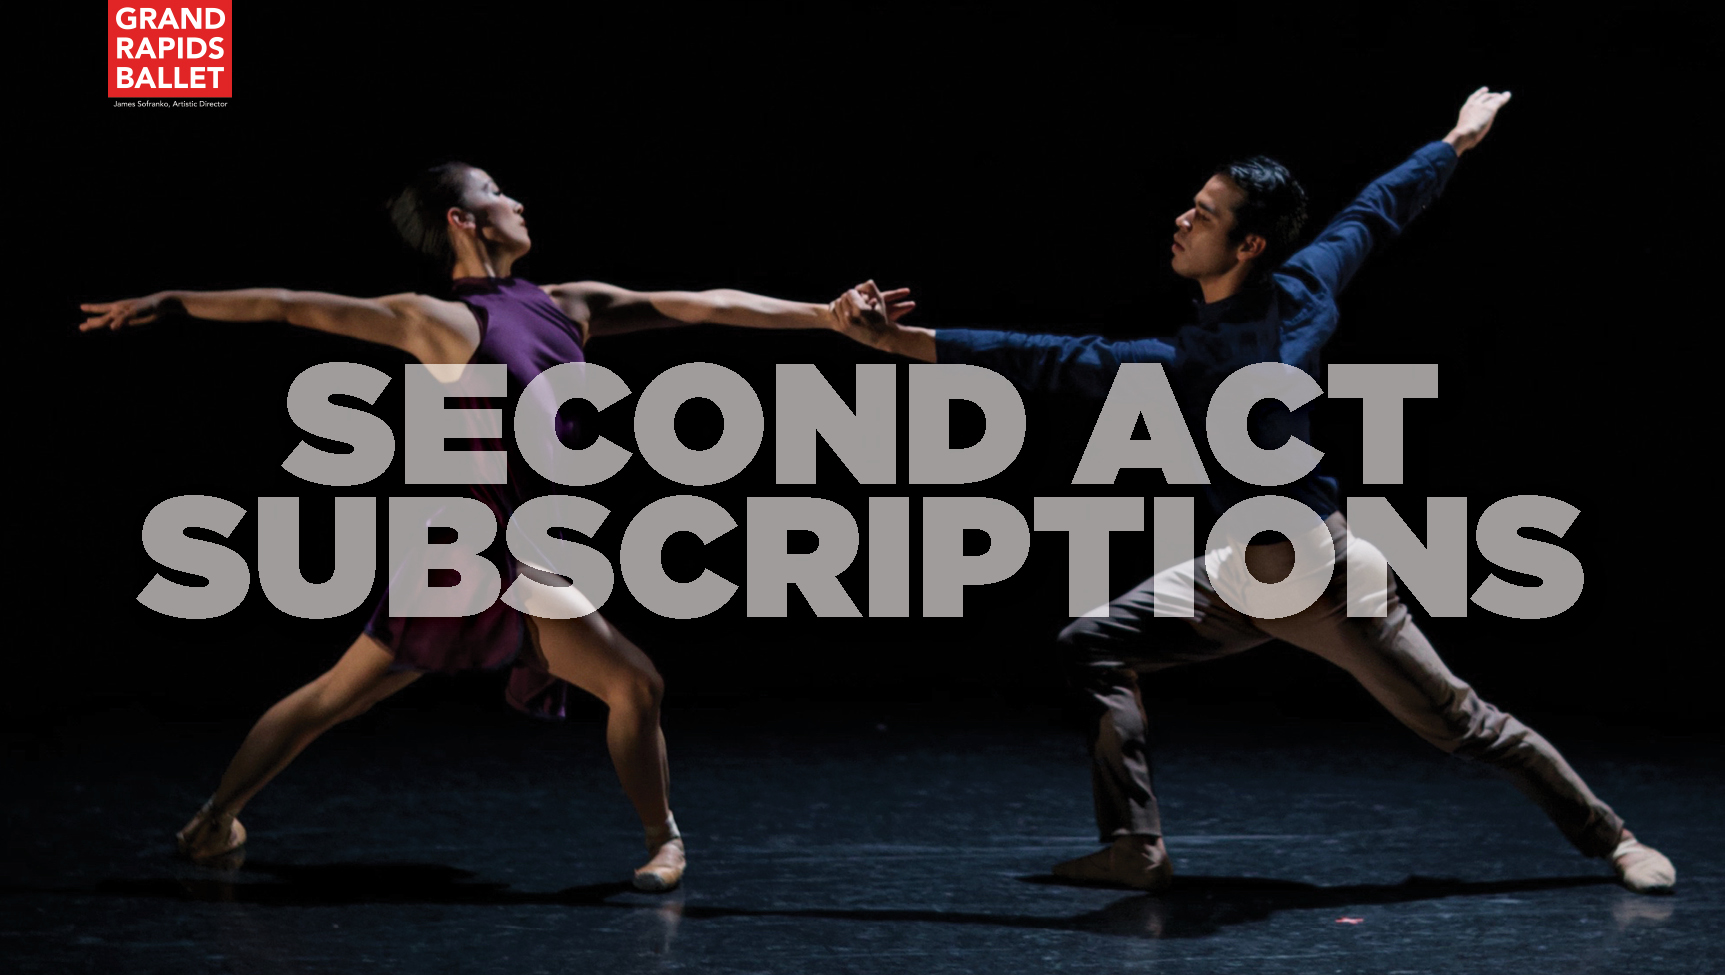 season subscription grand rapids ballet second act michigan